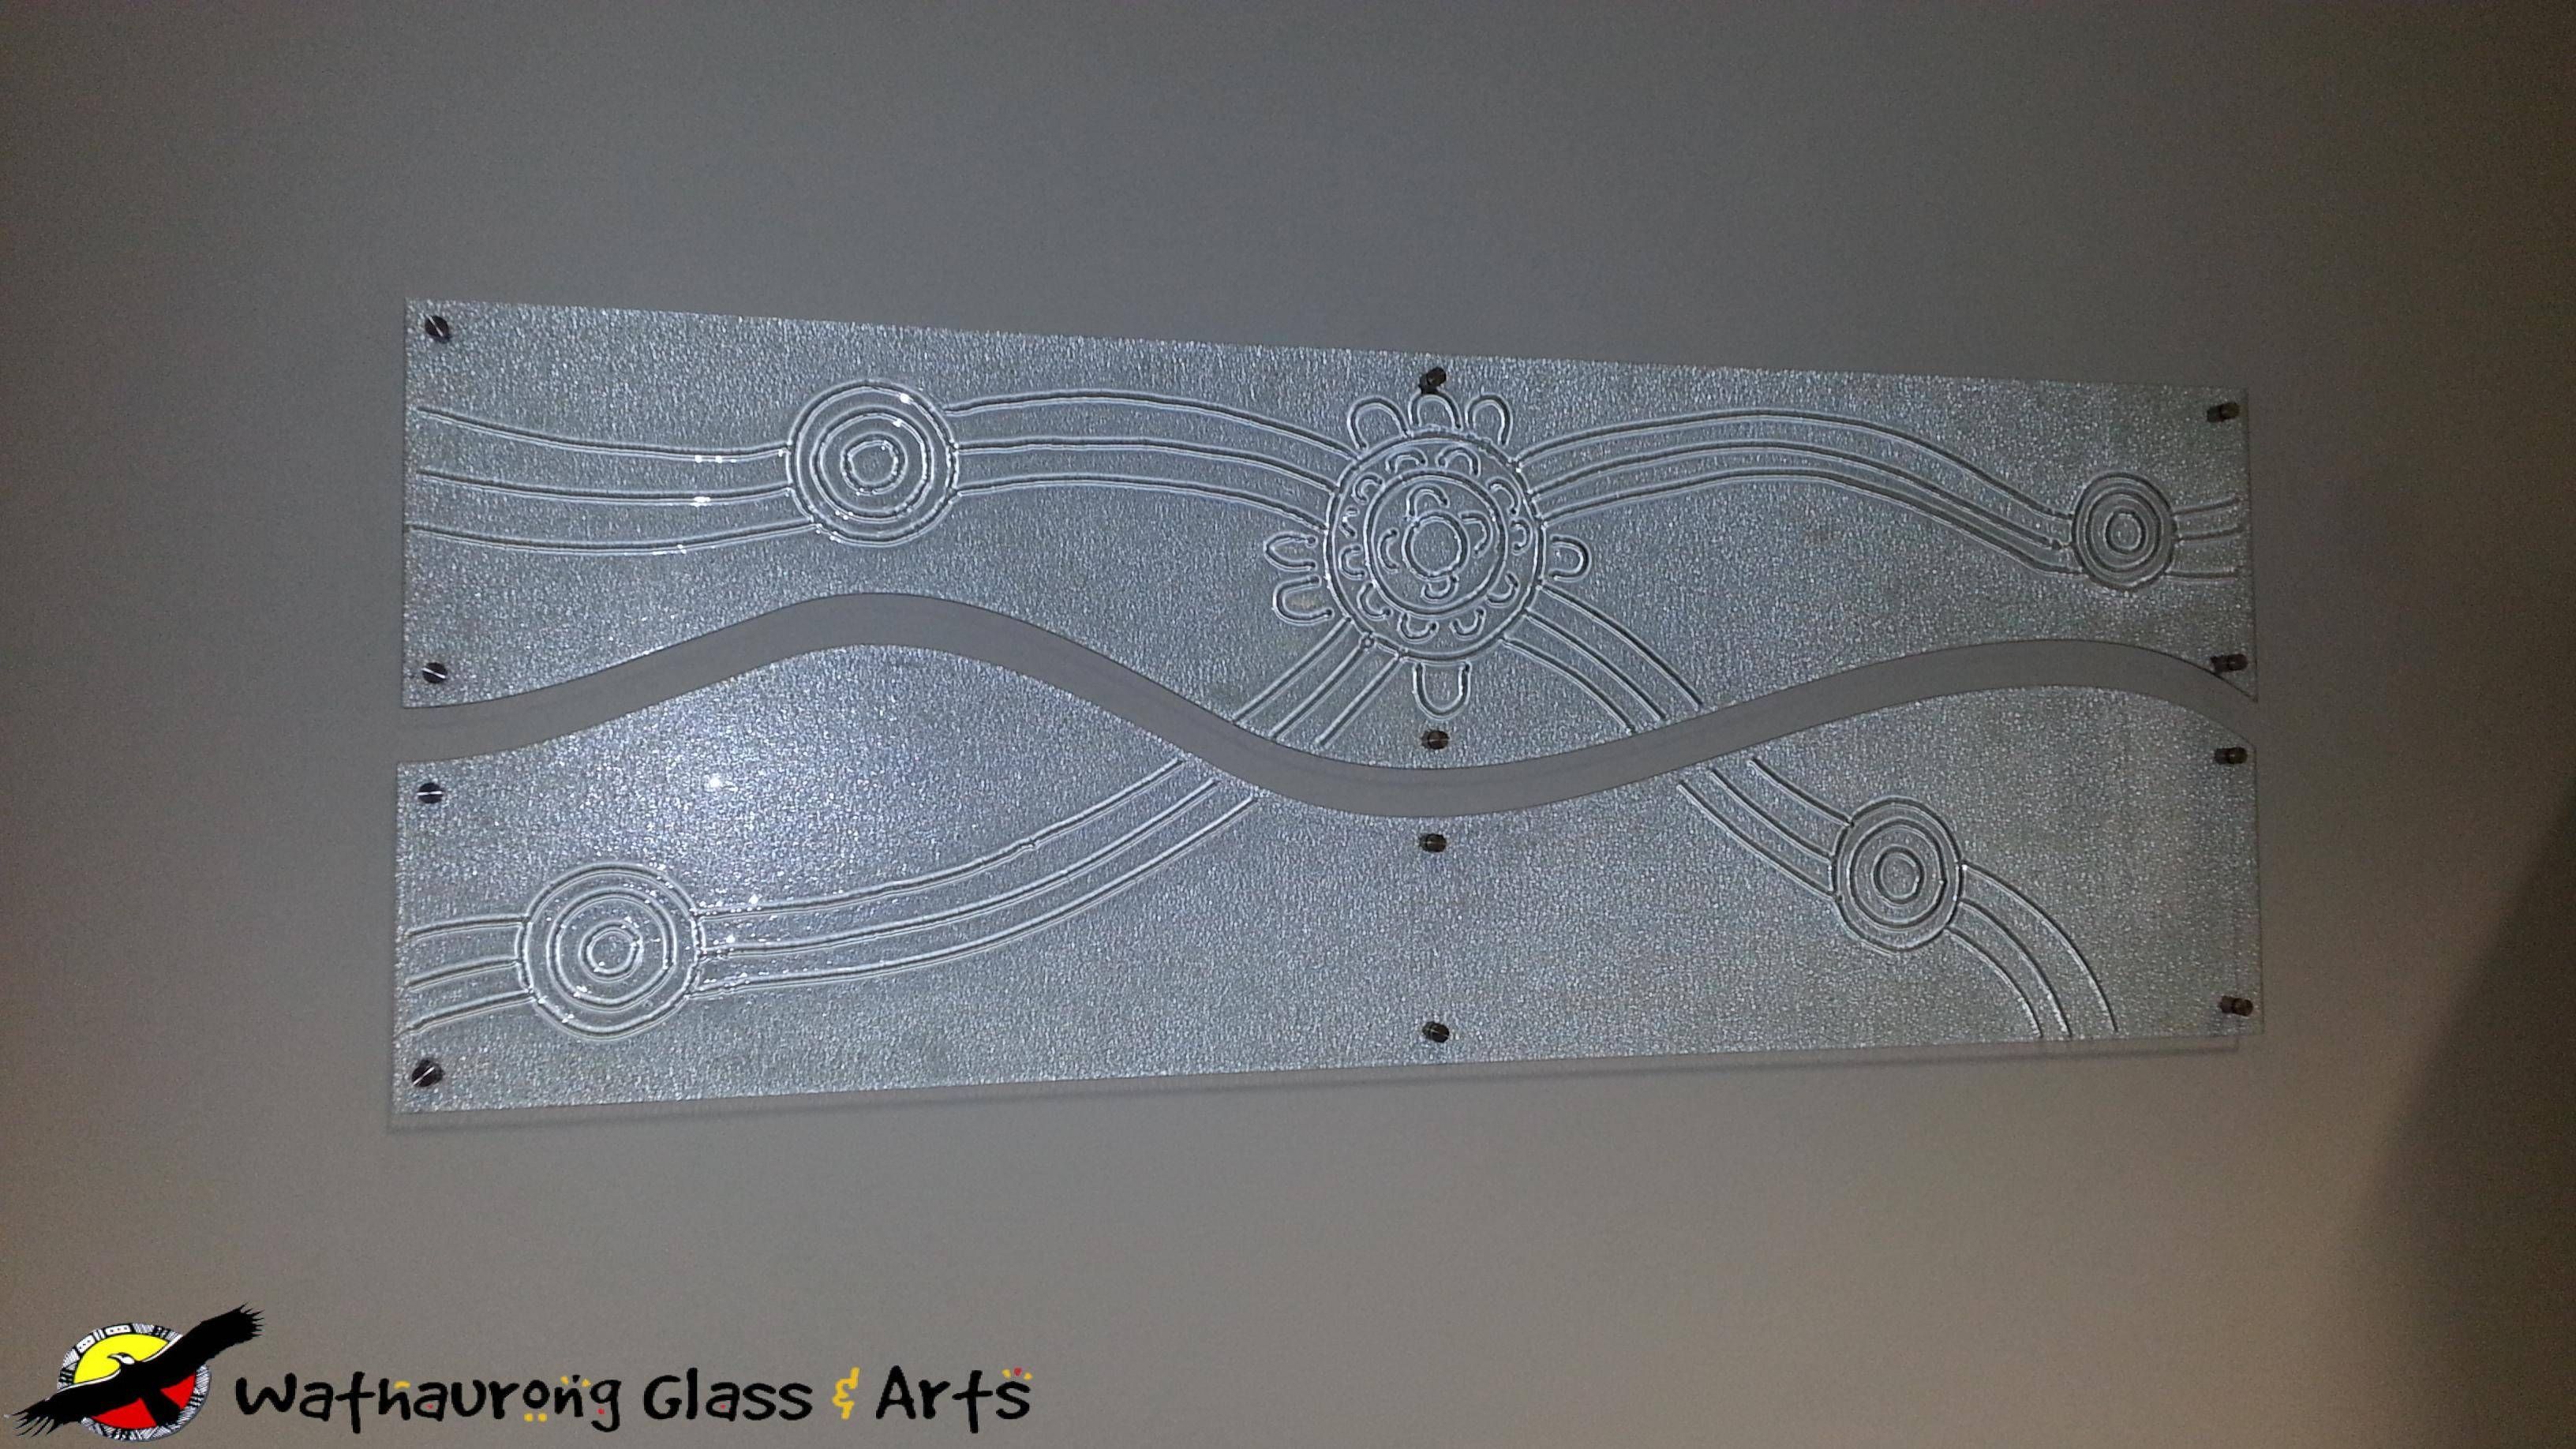 Aboriginal Glass Art Panel – Wathaurong Glass Within 2018 Glass Wall Art Panels (Gallery 9 of 20)